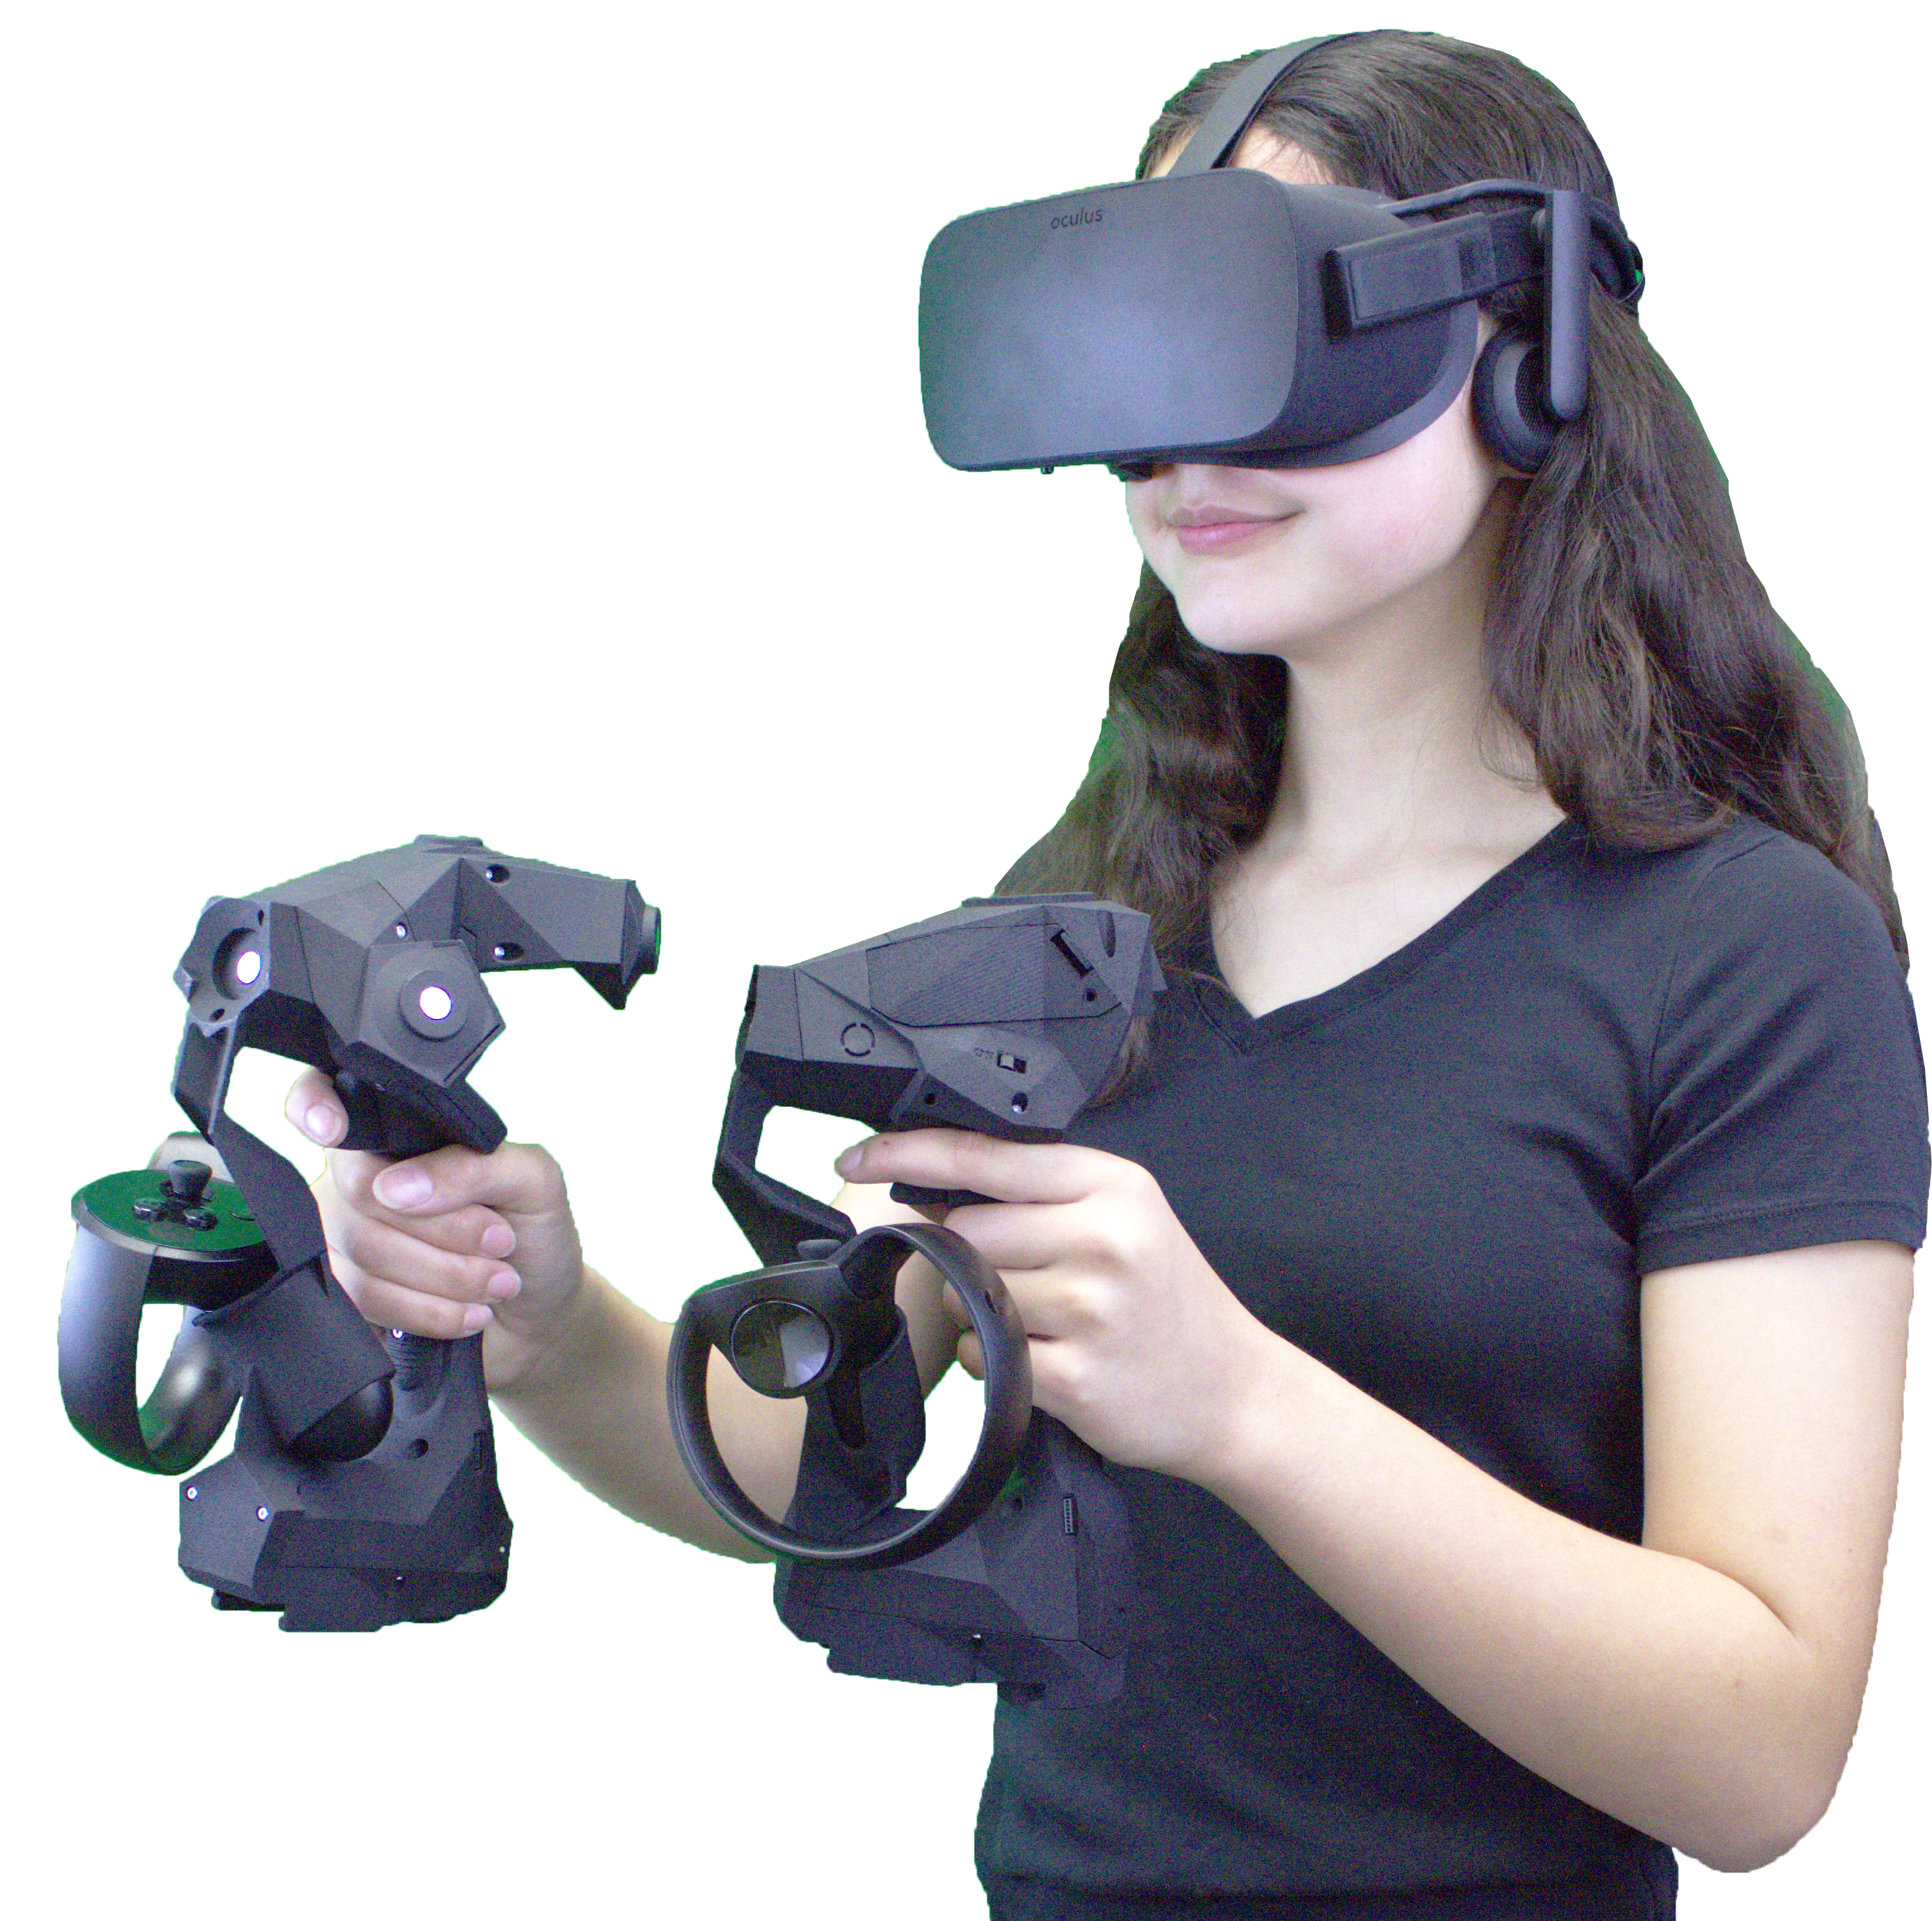 Vr net. VR ф315. Контроллеры для VR. ВР шлем с контроллерами. VR очки с контроллерами.